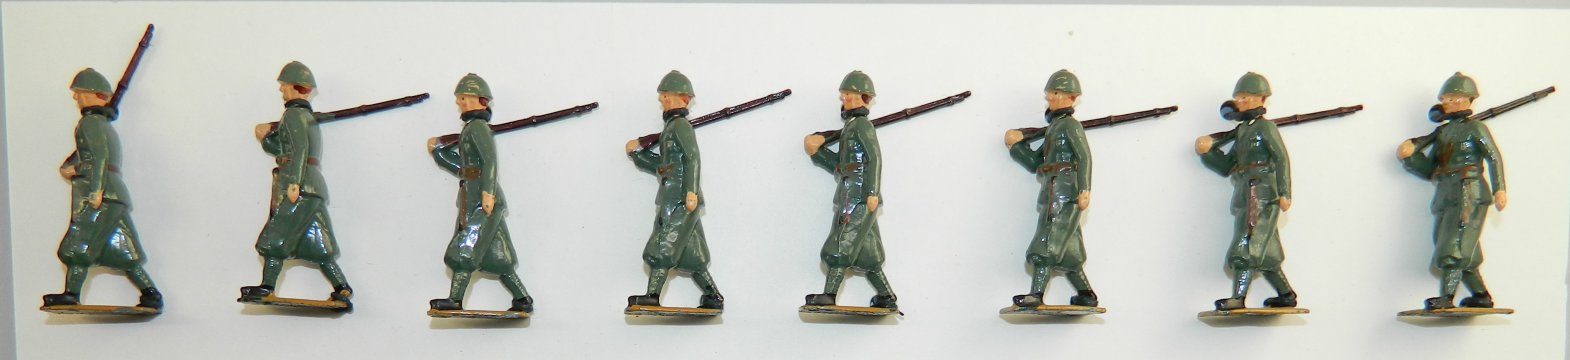 WWI Soldiers in Steel Helmets Marching